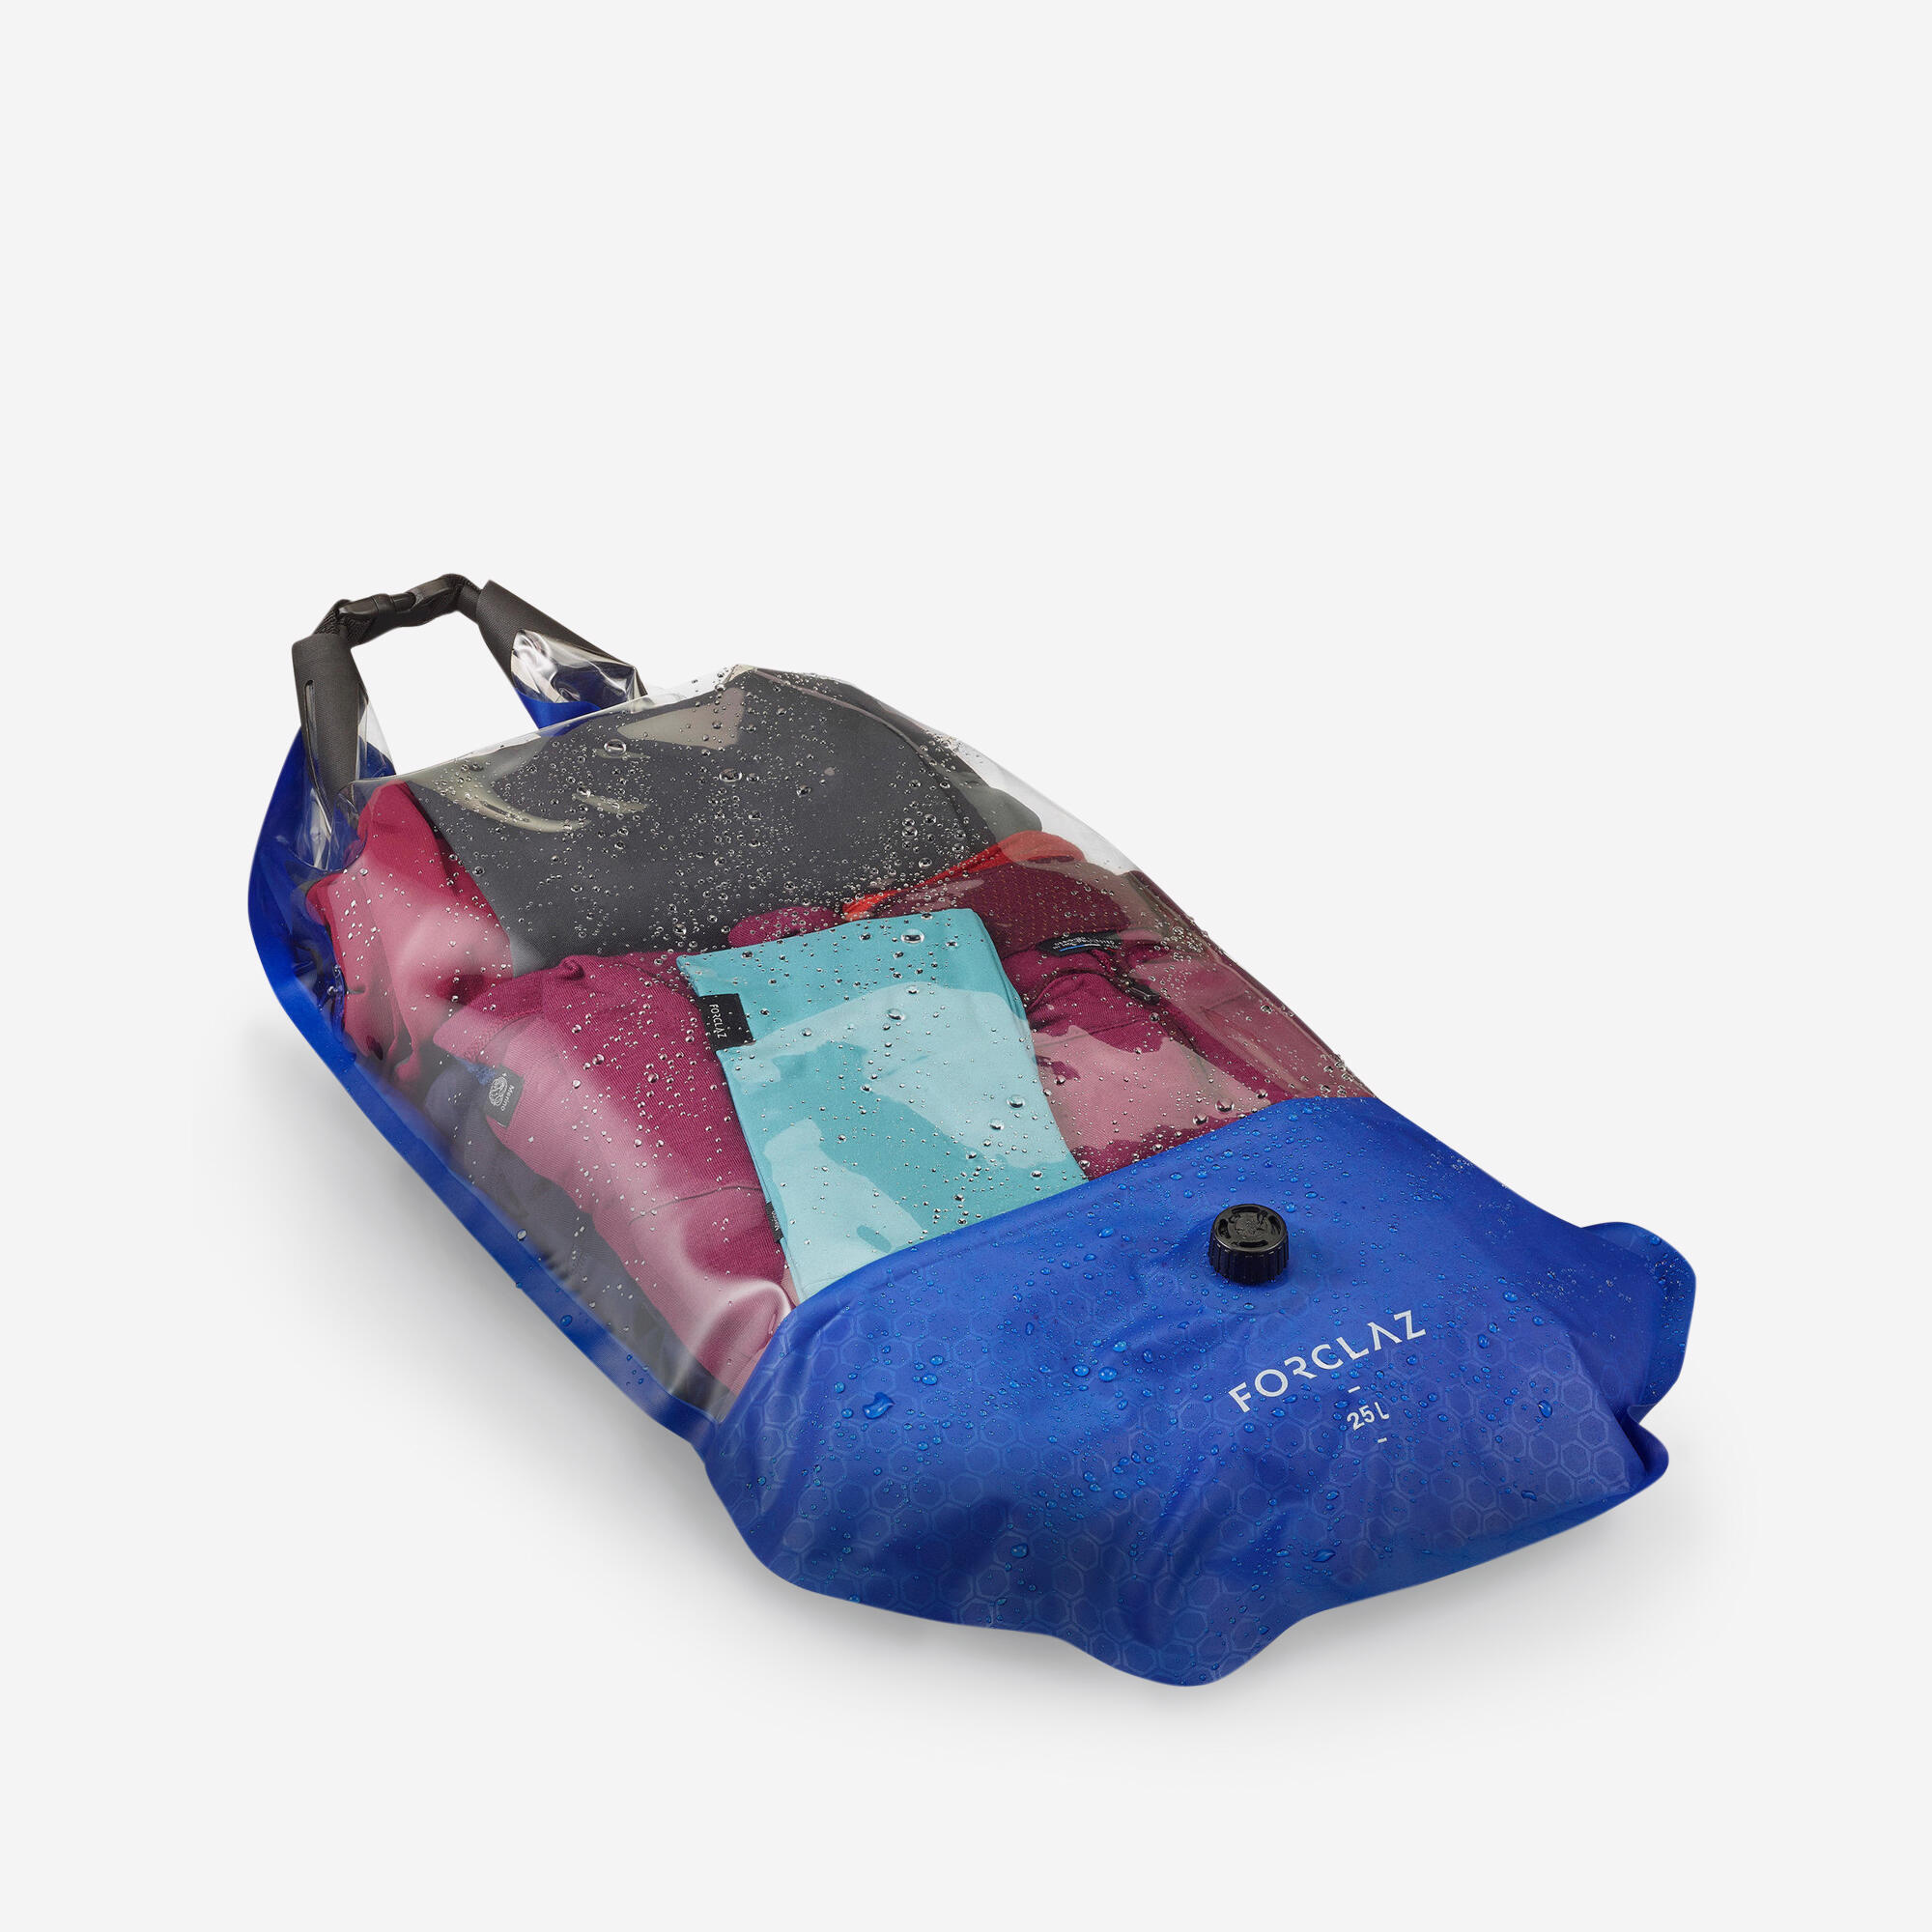 Compression Sacks: Compression Bags for Travel